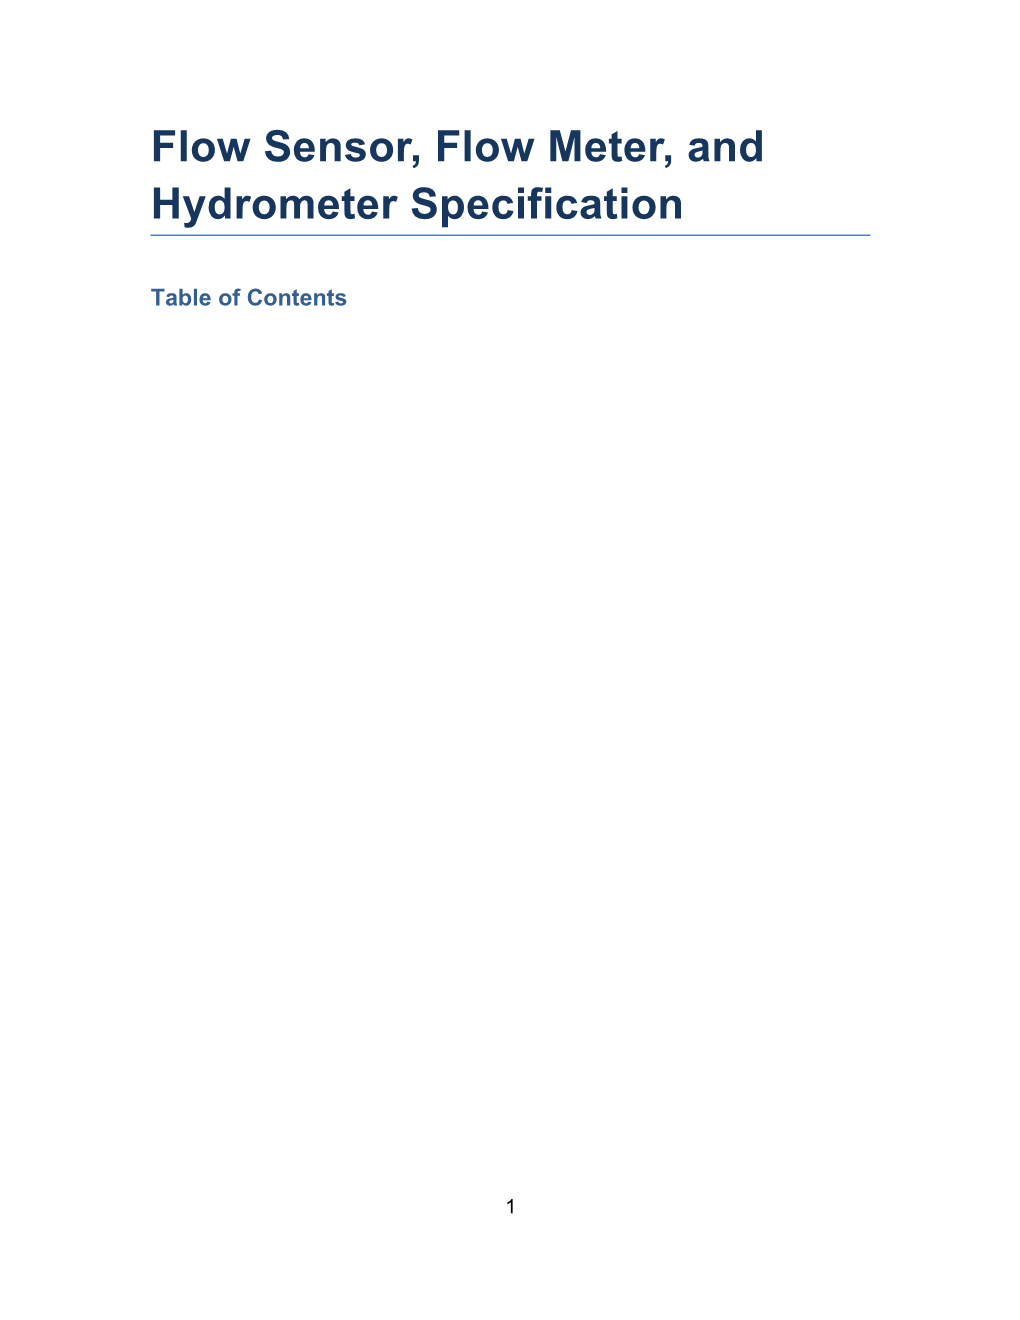 Flow Sensor & Hydrometer Nonprorietary Spec